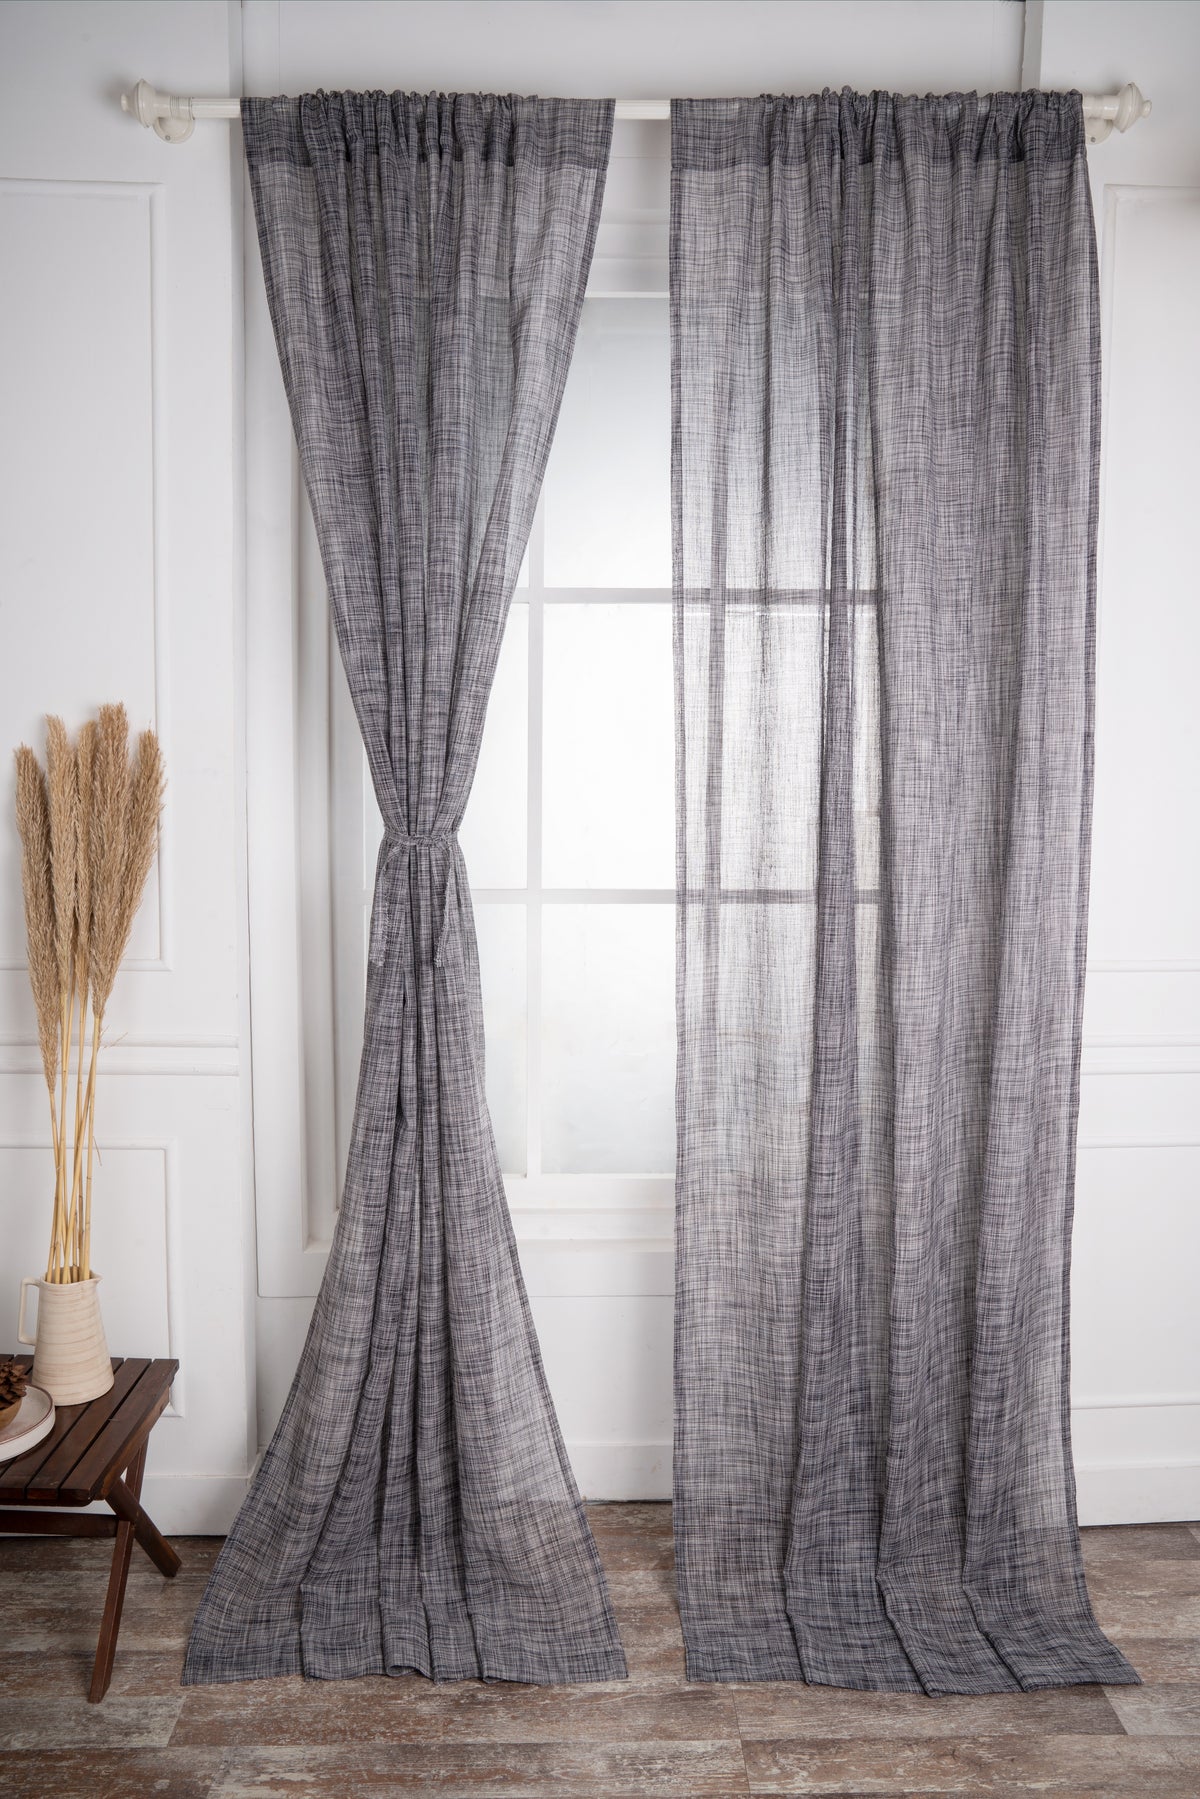 Black & White Jute Textured Curtain | Set of 2 Panels